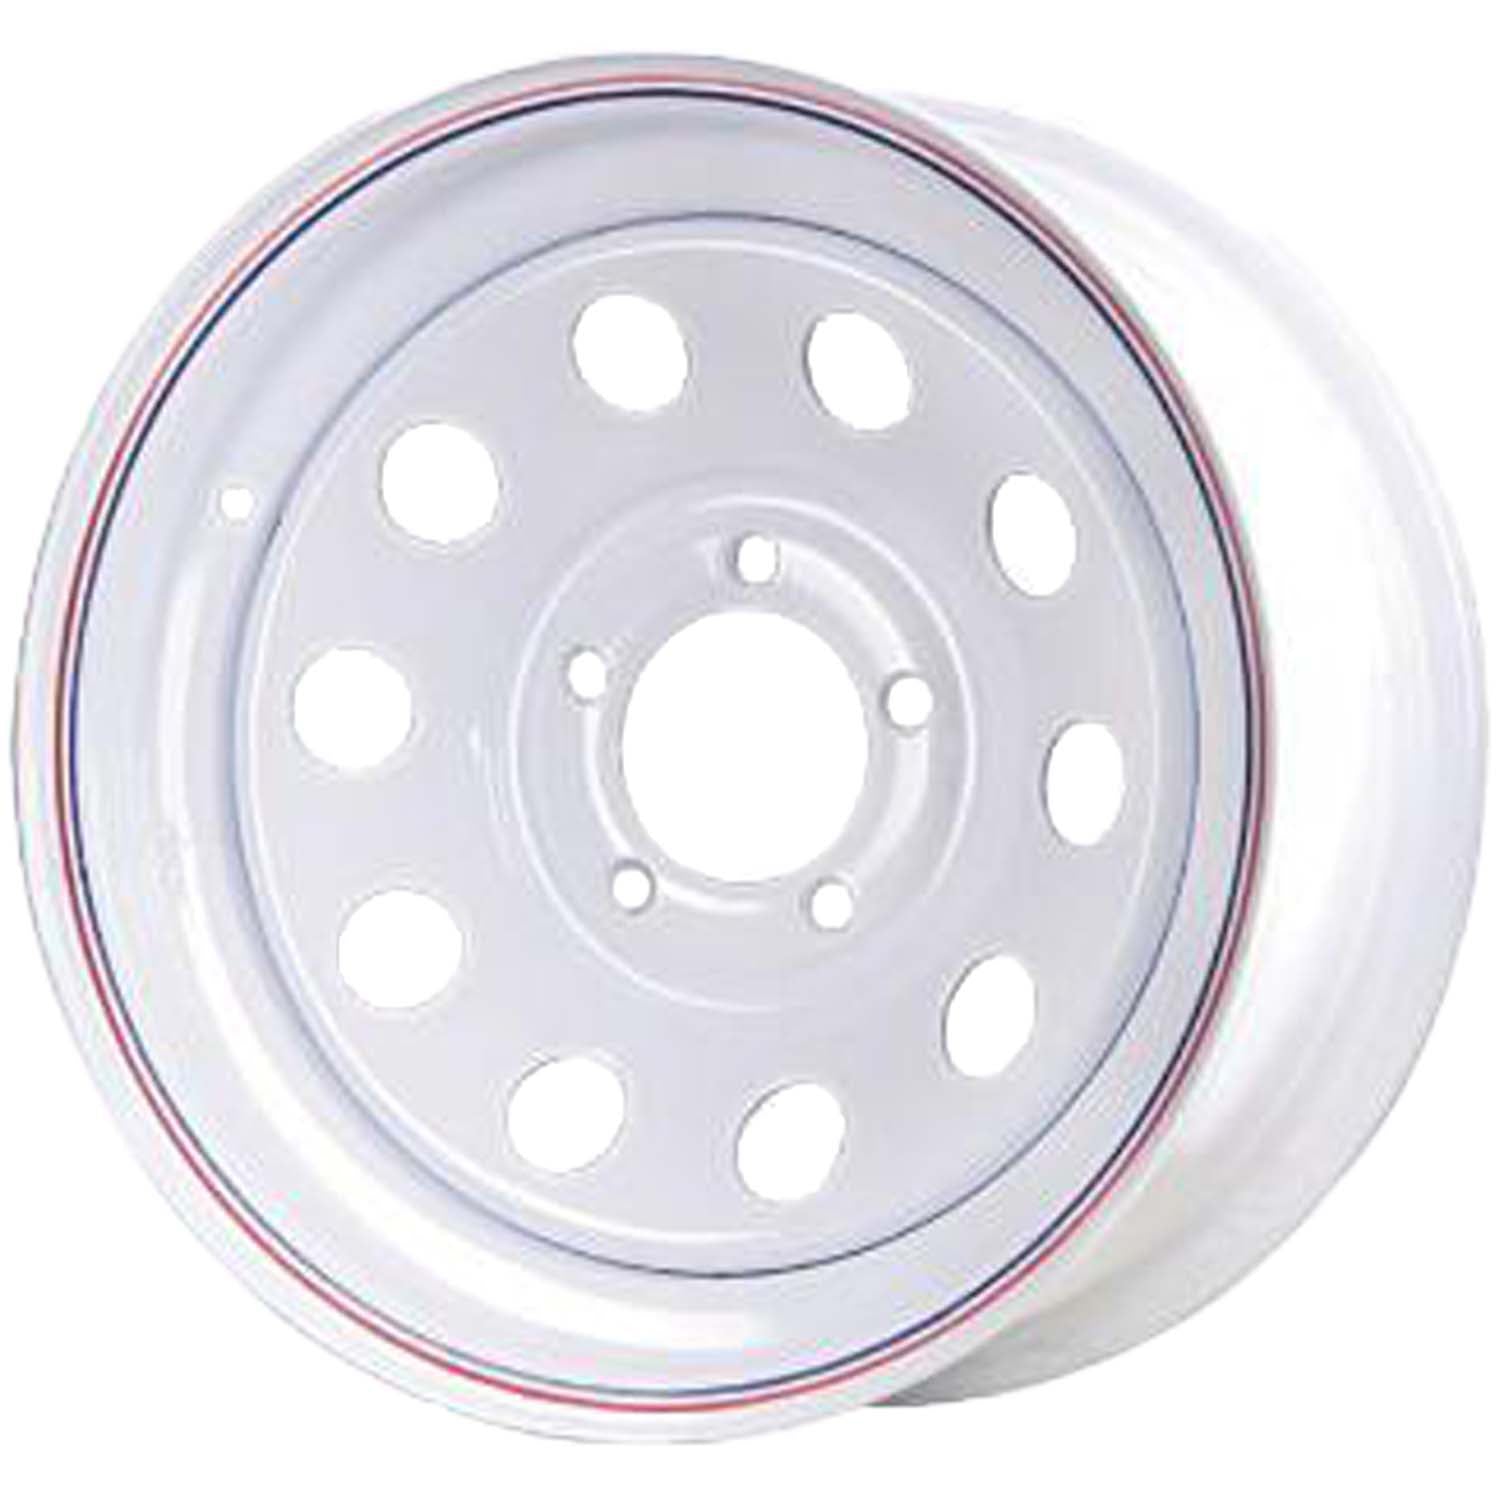 15x6 5 On 4.5 Modular Steel Trailer Wheel - White with Pin Stripes